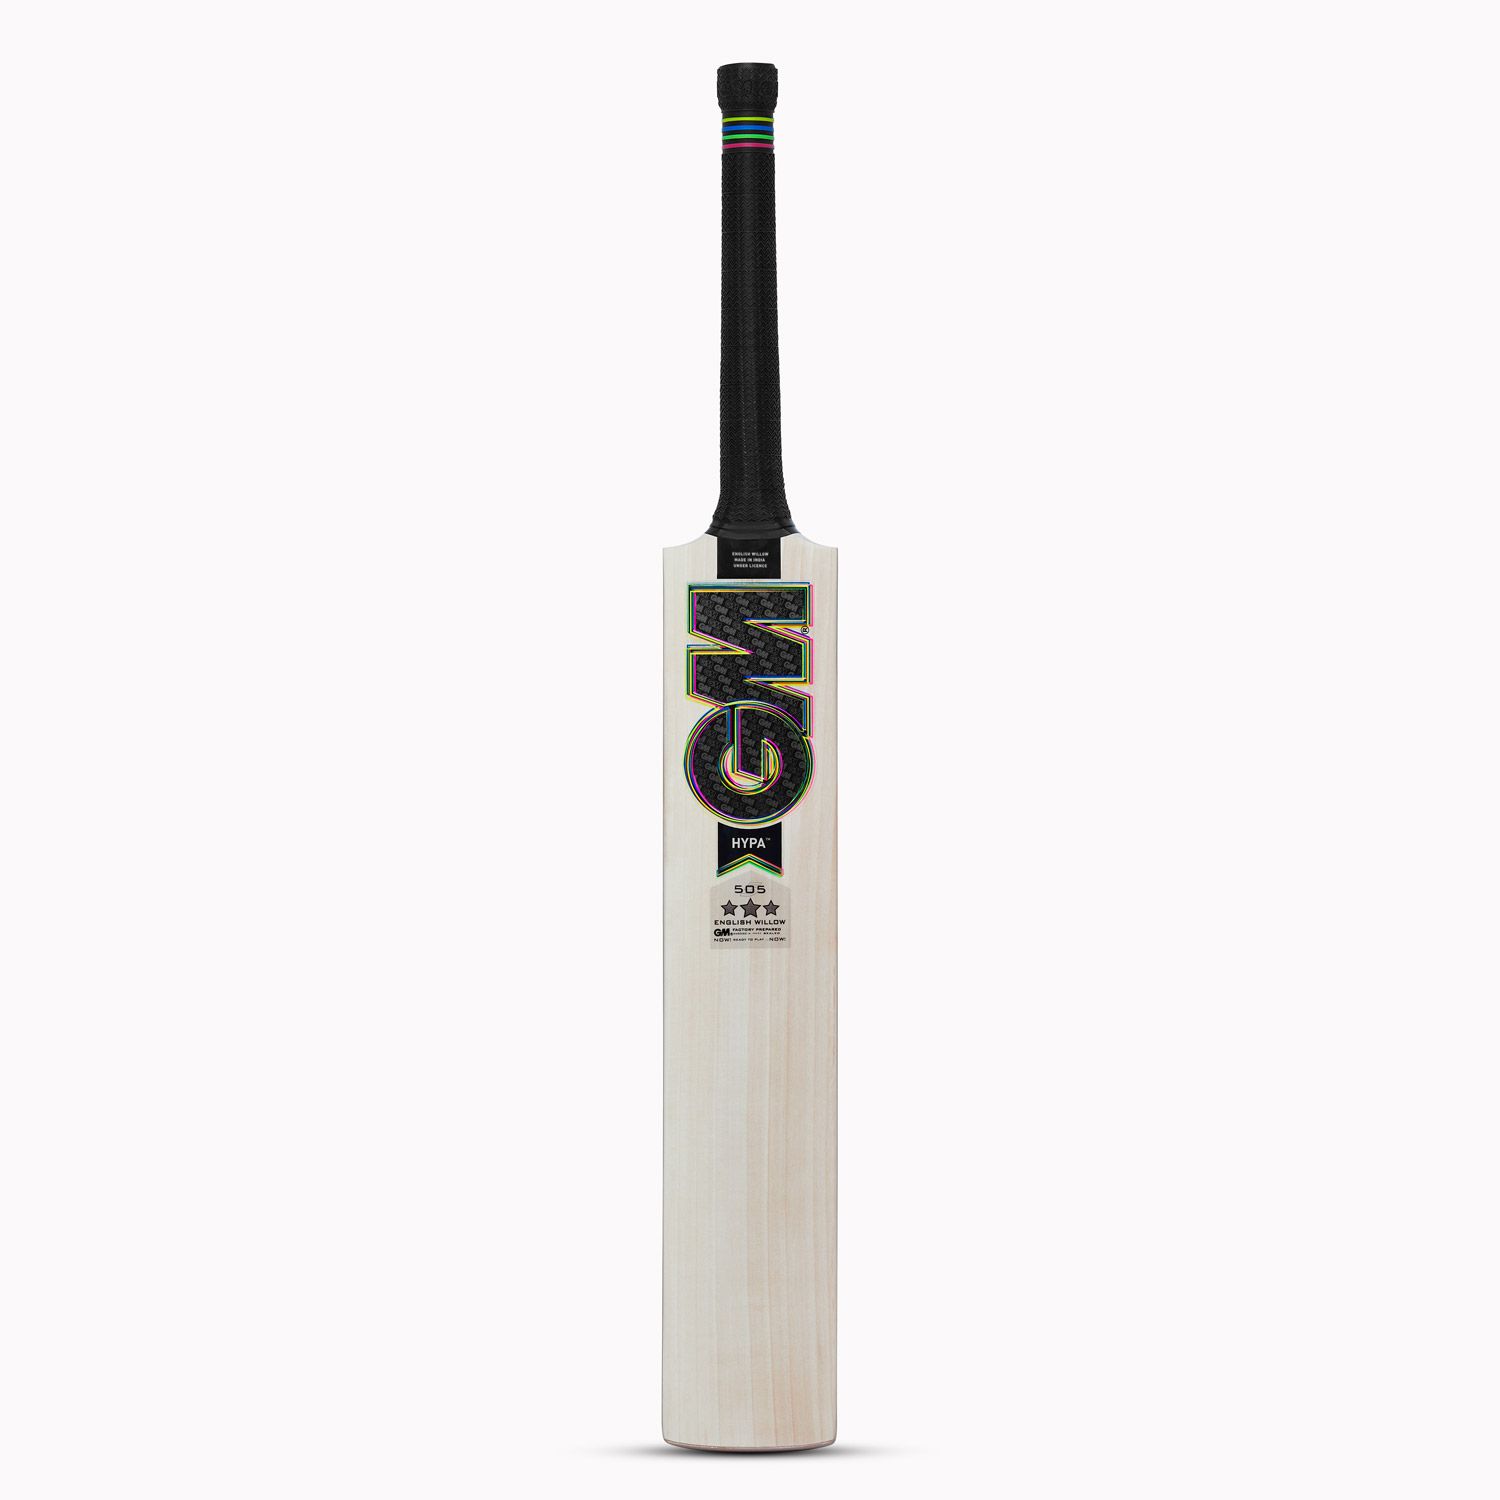 Hypa 505 English Willow Cricket Bat